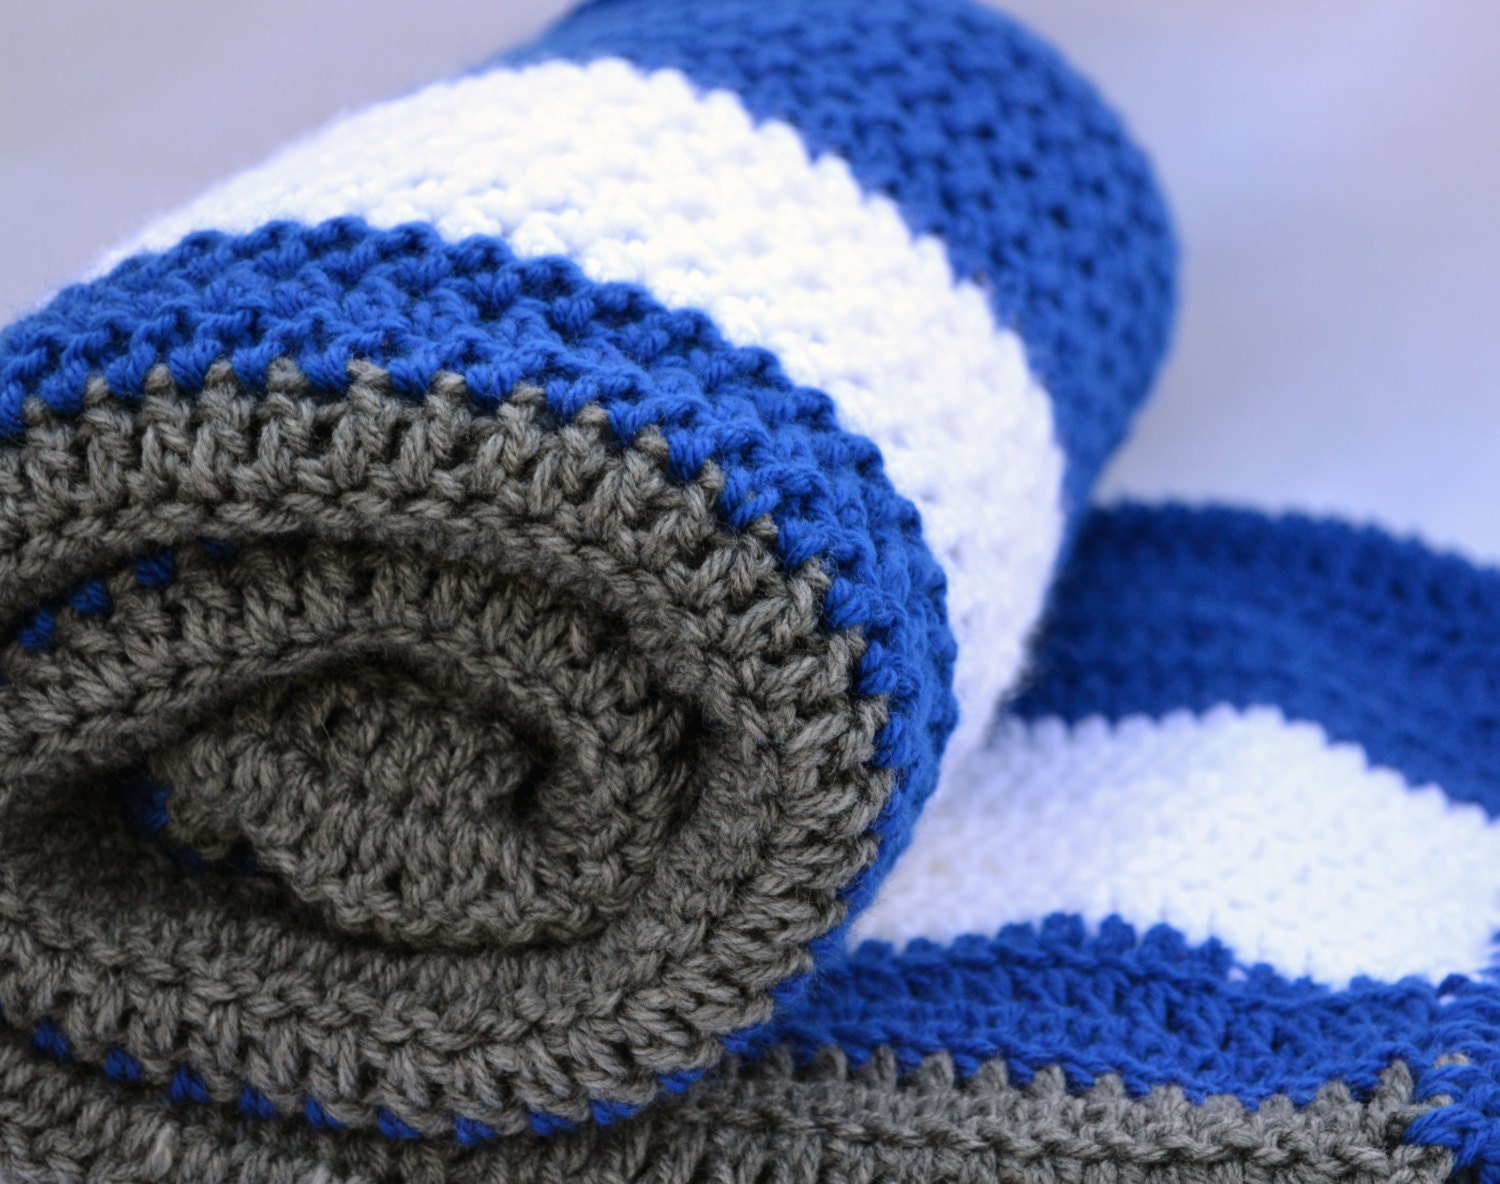 Personalized Sports Knit Baby Blanket by BlazingNeedles on ...